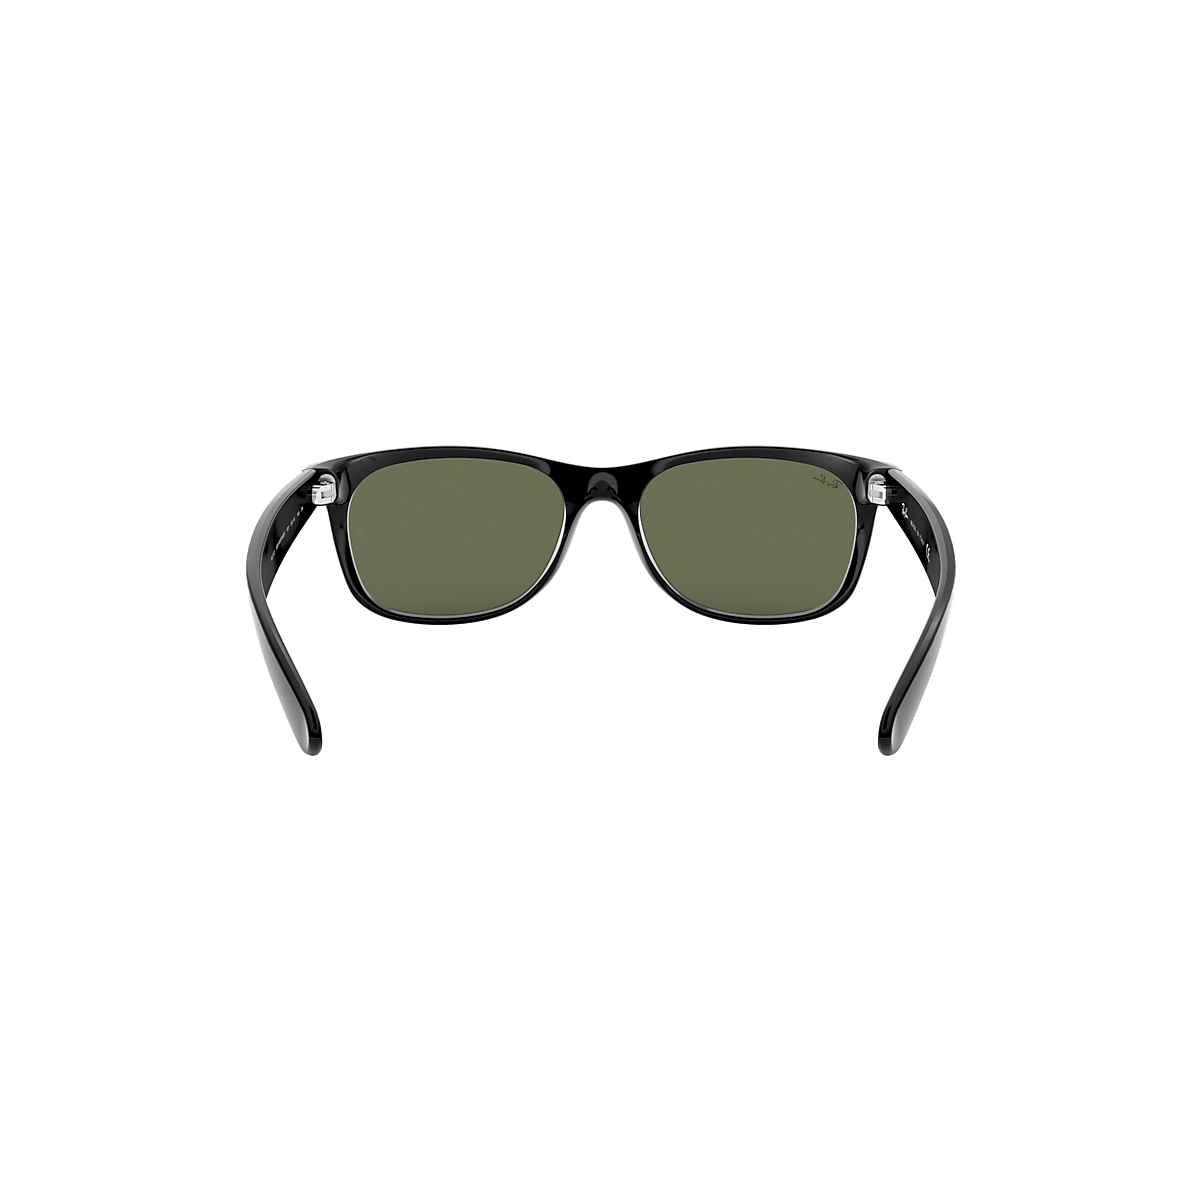 New Wayfarer Classic Sunglasses in Black and Green | Ray-Ban®